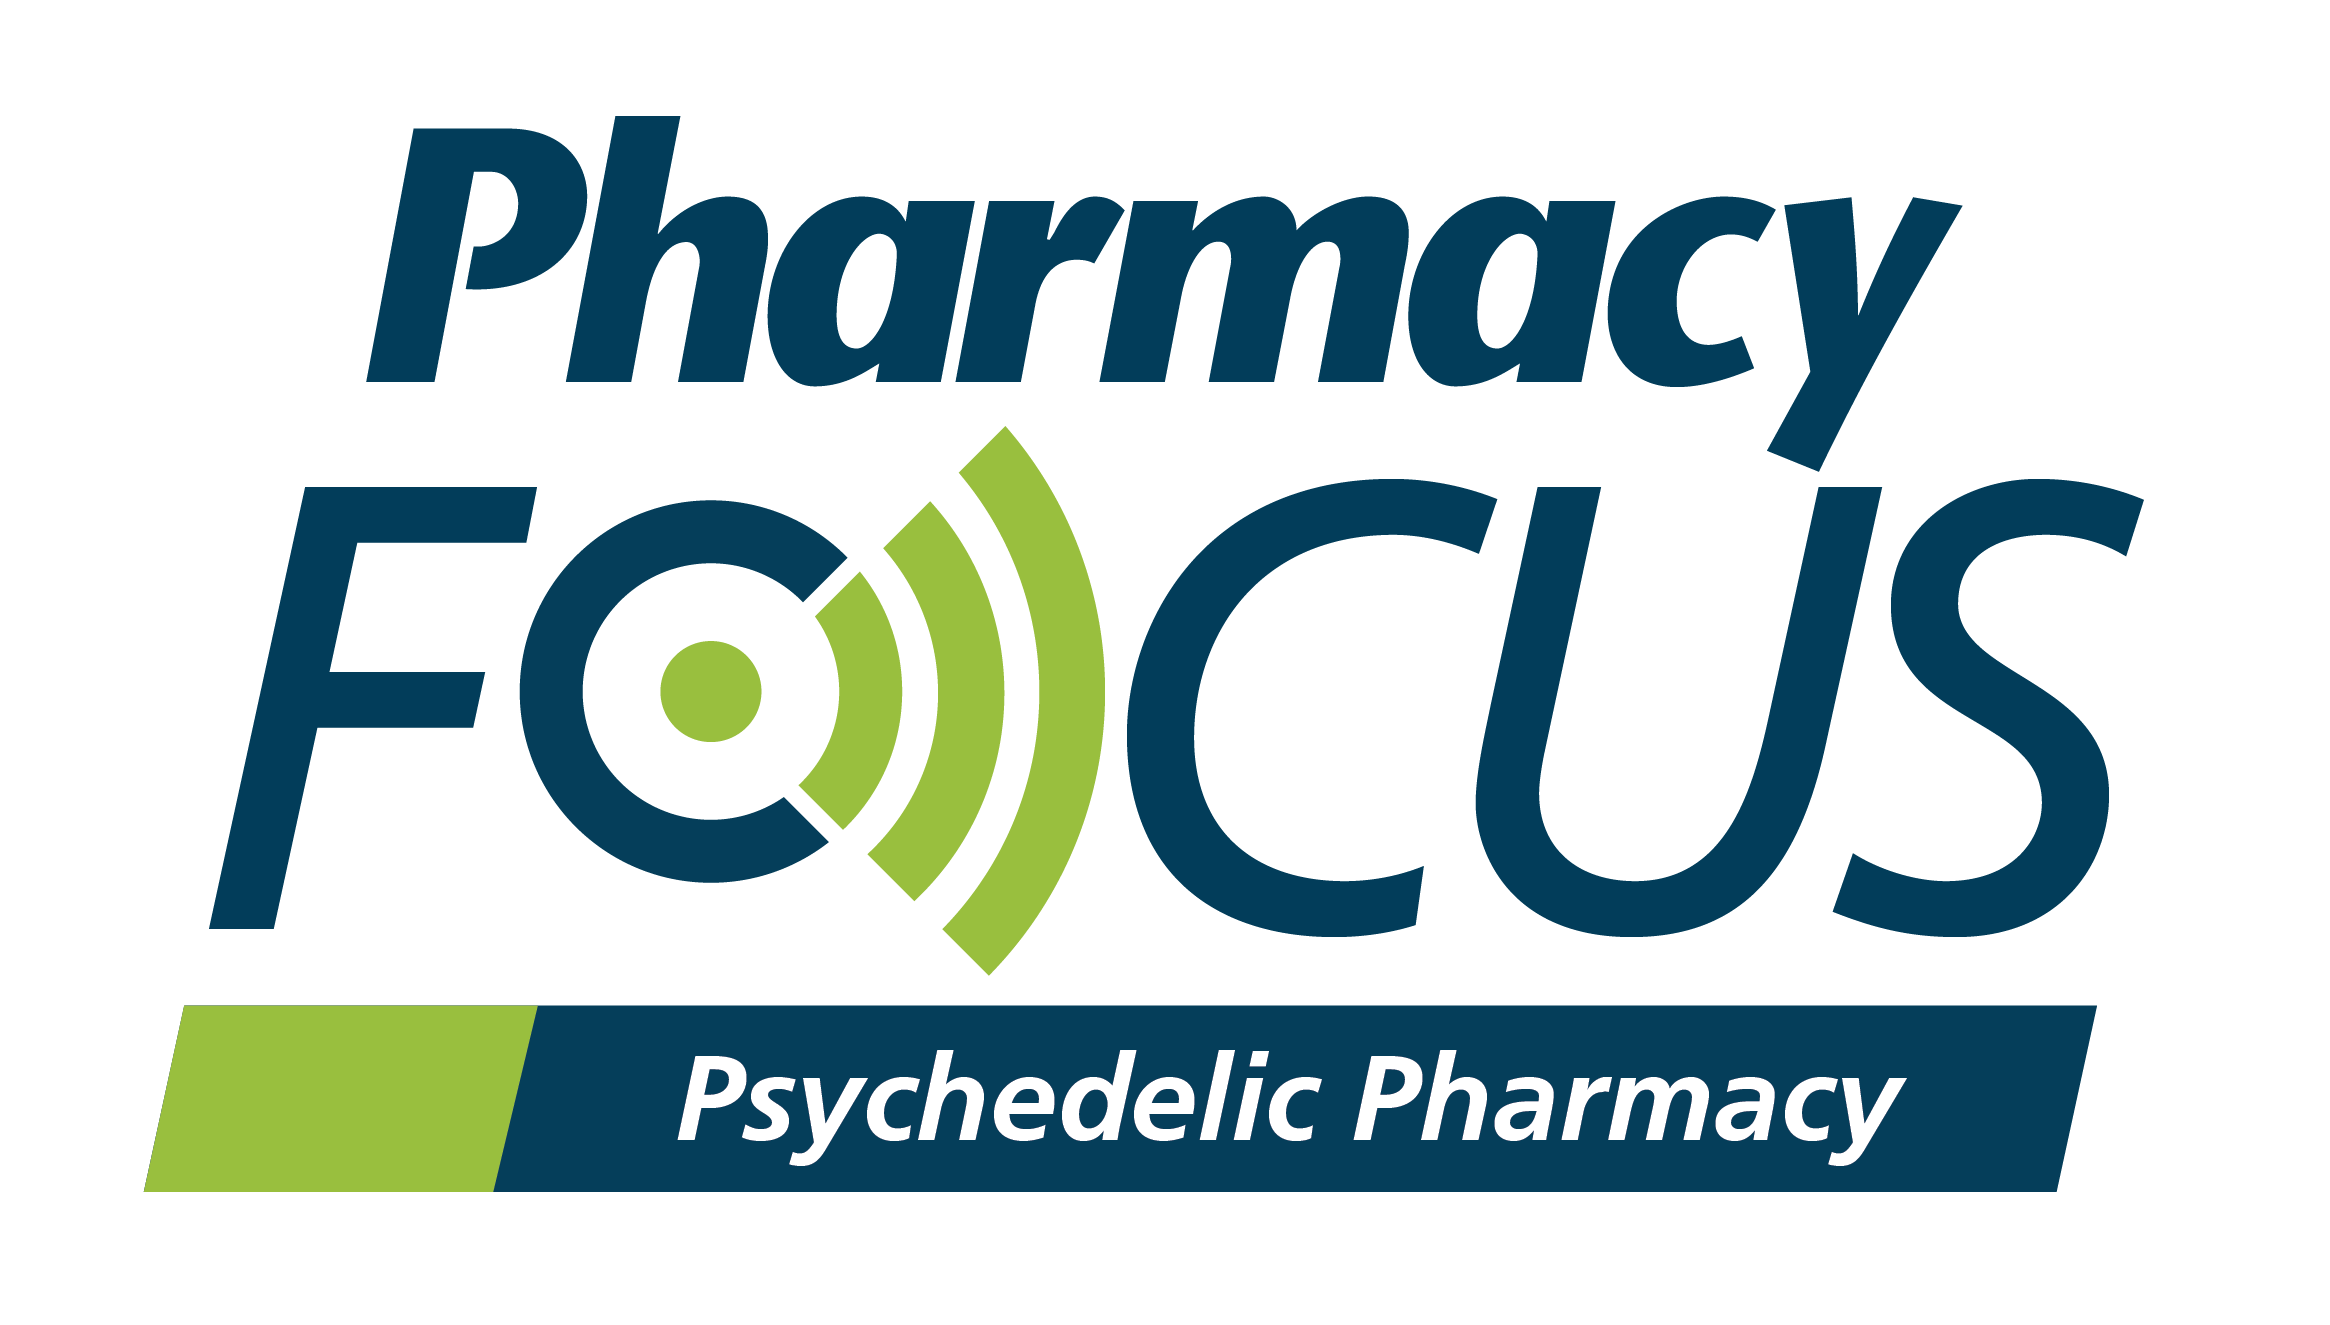 Pharmacy Focus: Psychedelic Pharmacy - Episode 4